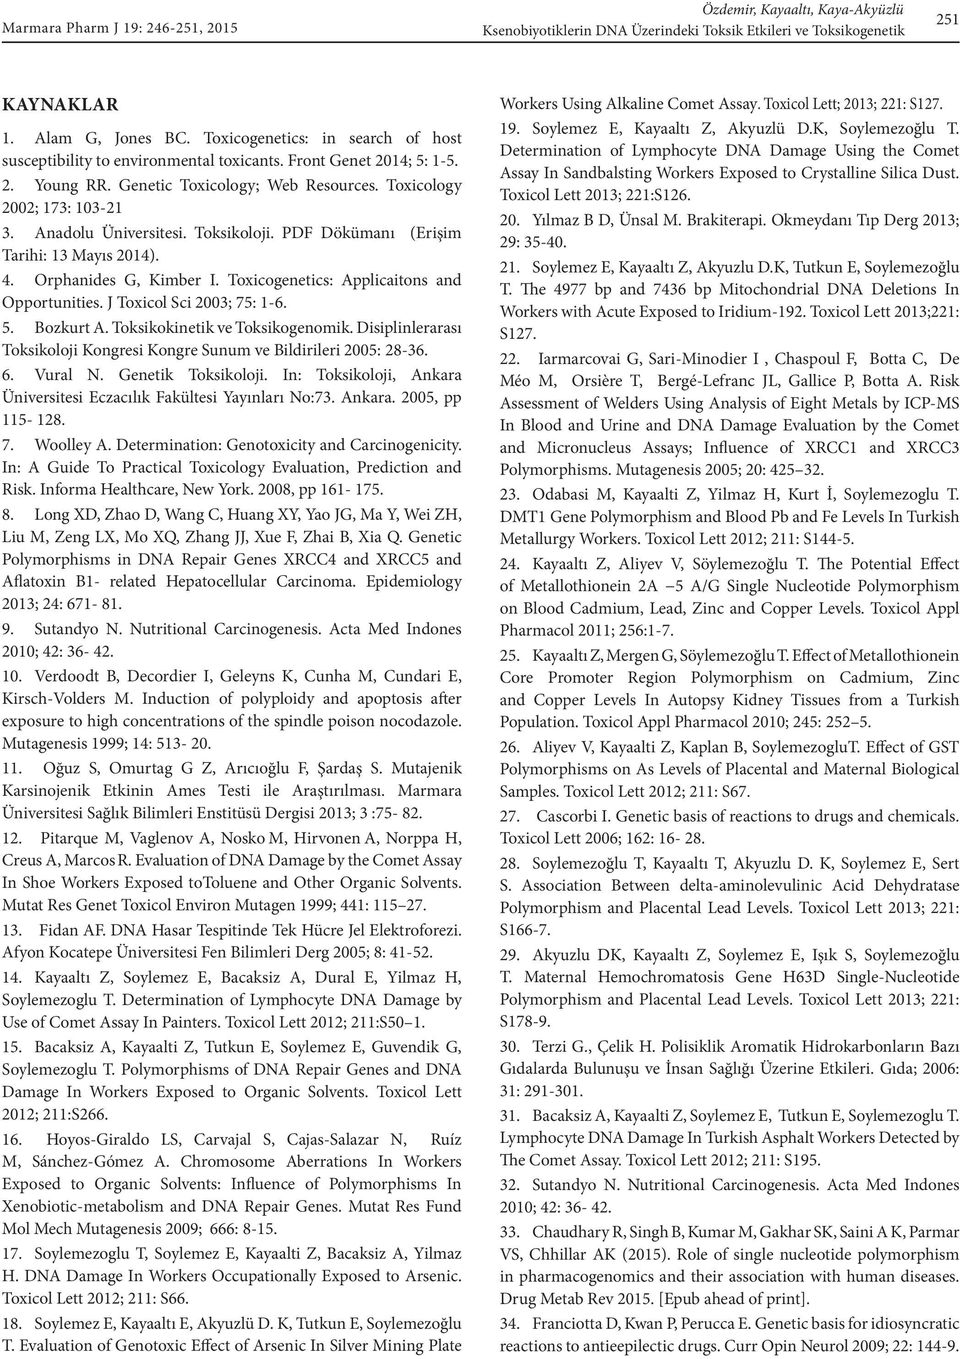 Toxicogenetics: Applicaitons and Opportunities. J Toxicol Sci 2003; 75: 1-6. 5. Bozkurt A. Toksikokinetik ve Toksikogenomik.